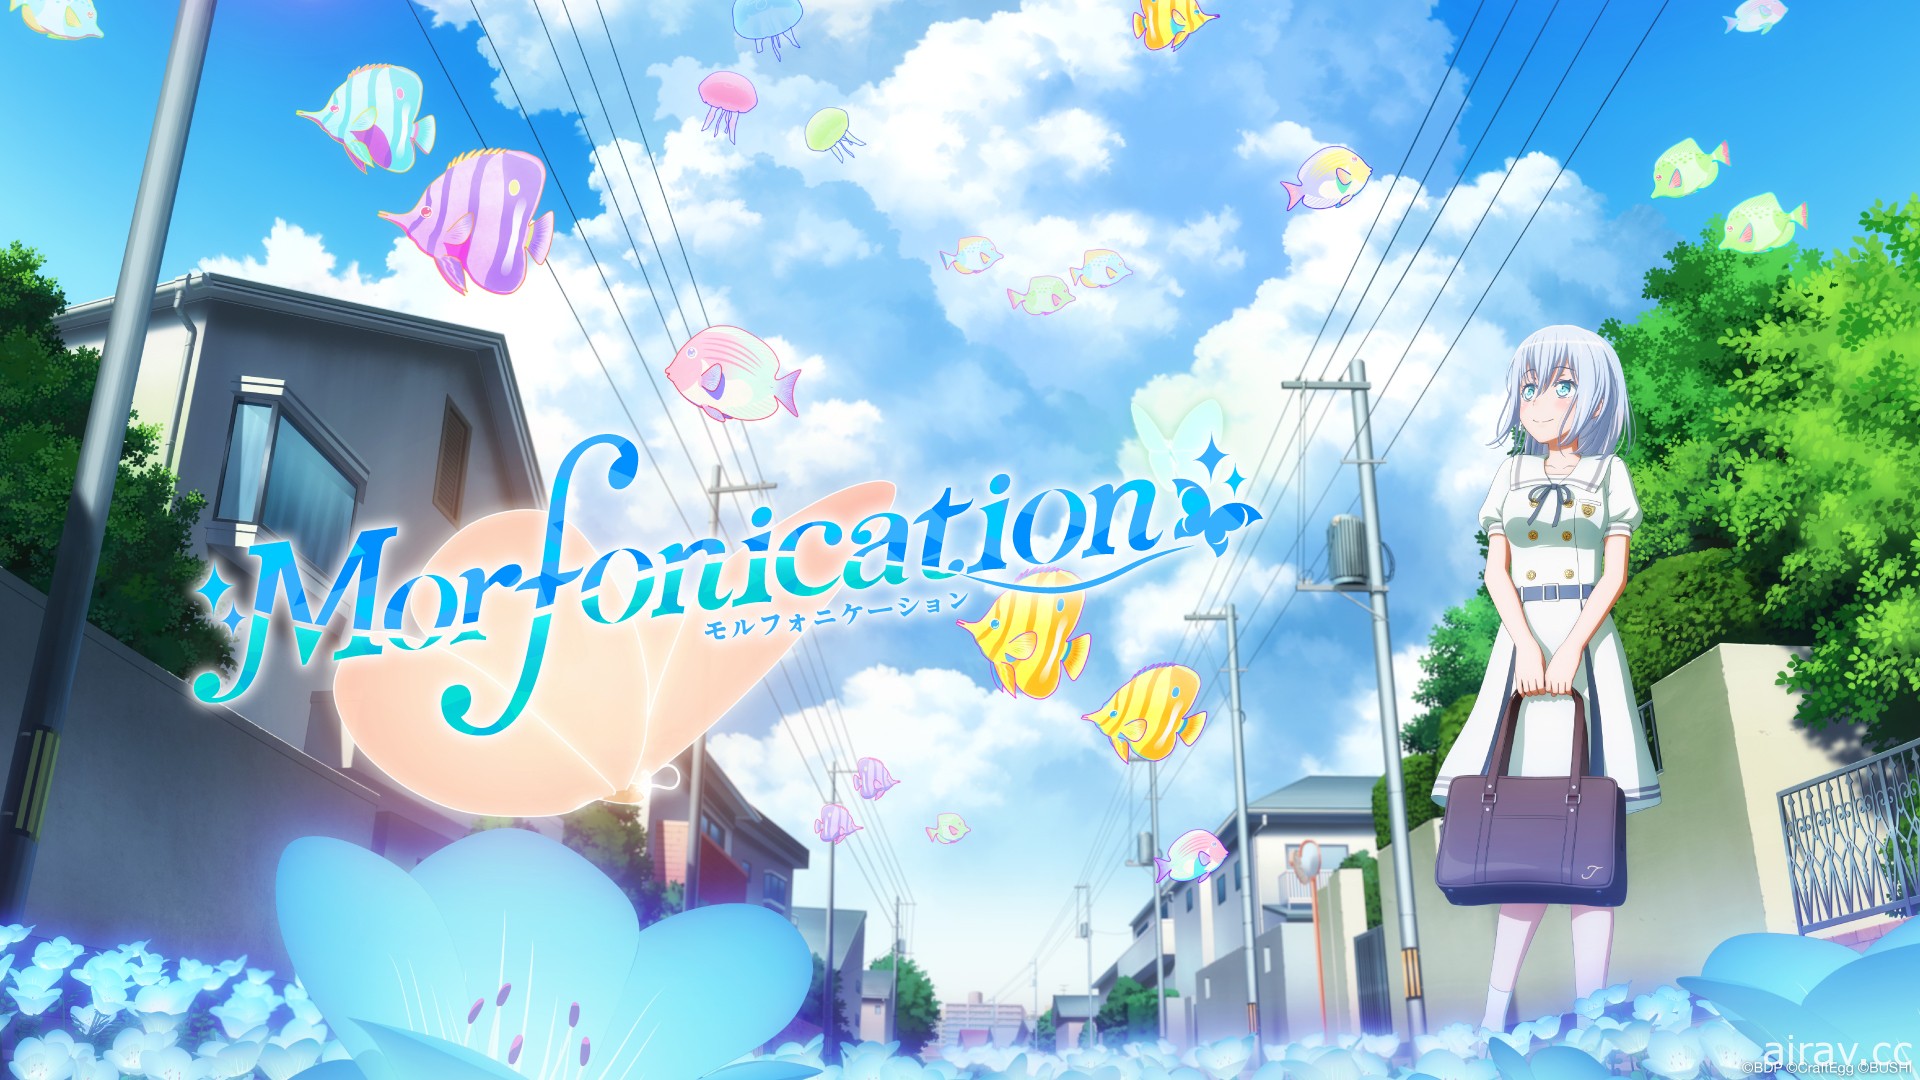 《BanG Dream！Morfonication》釋出前導視覺圖與首波宣傳影像 7 月 28 日開播